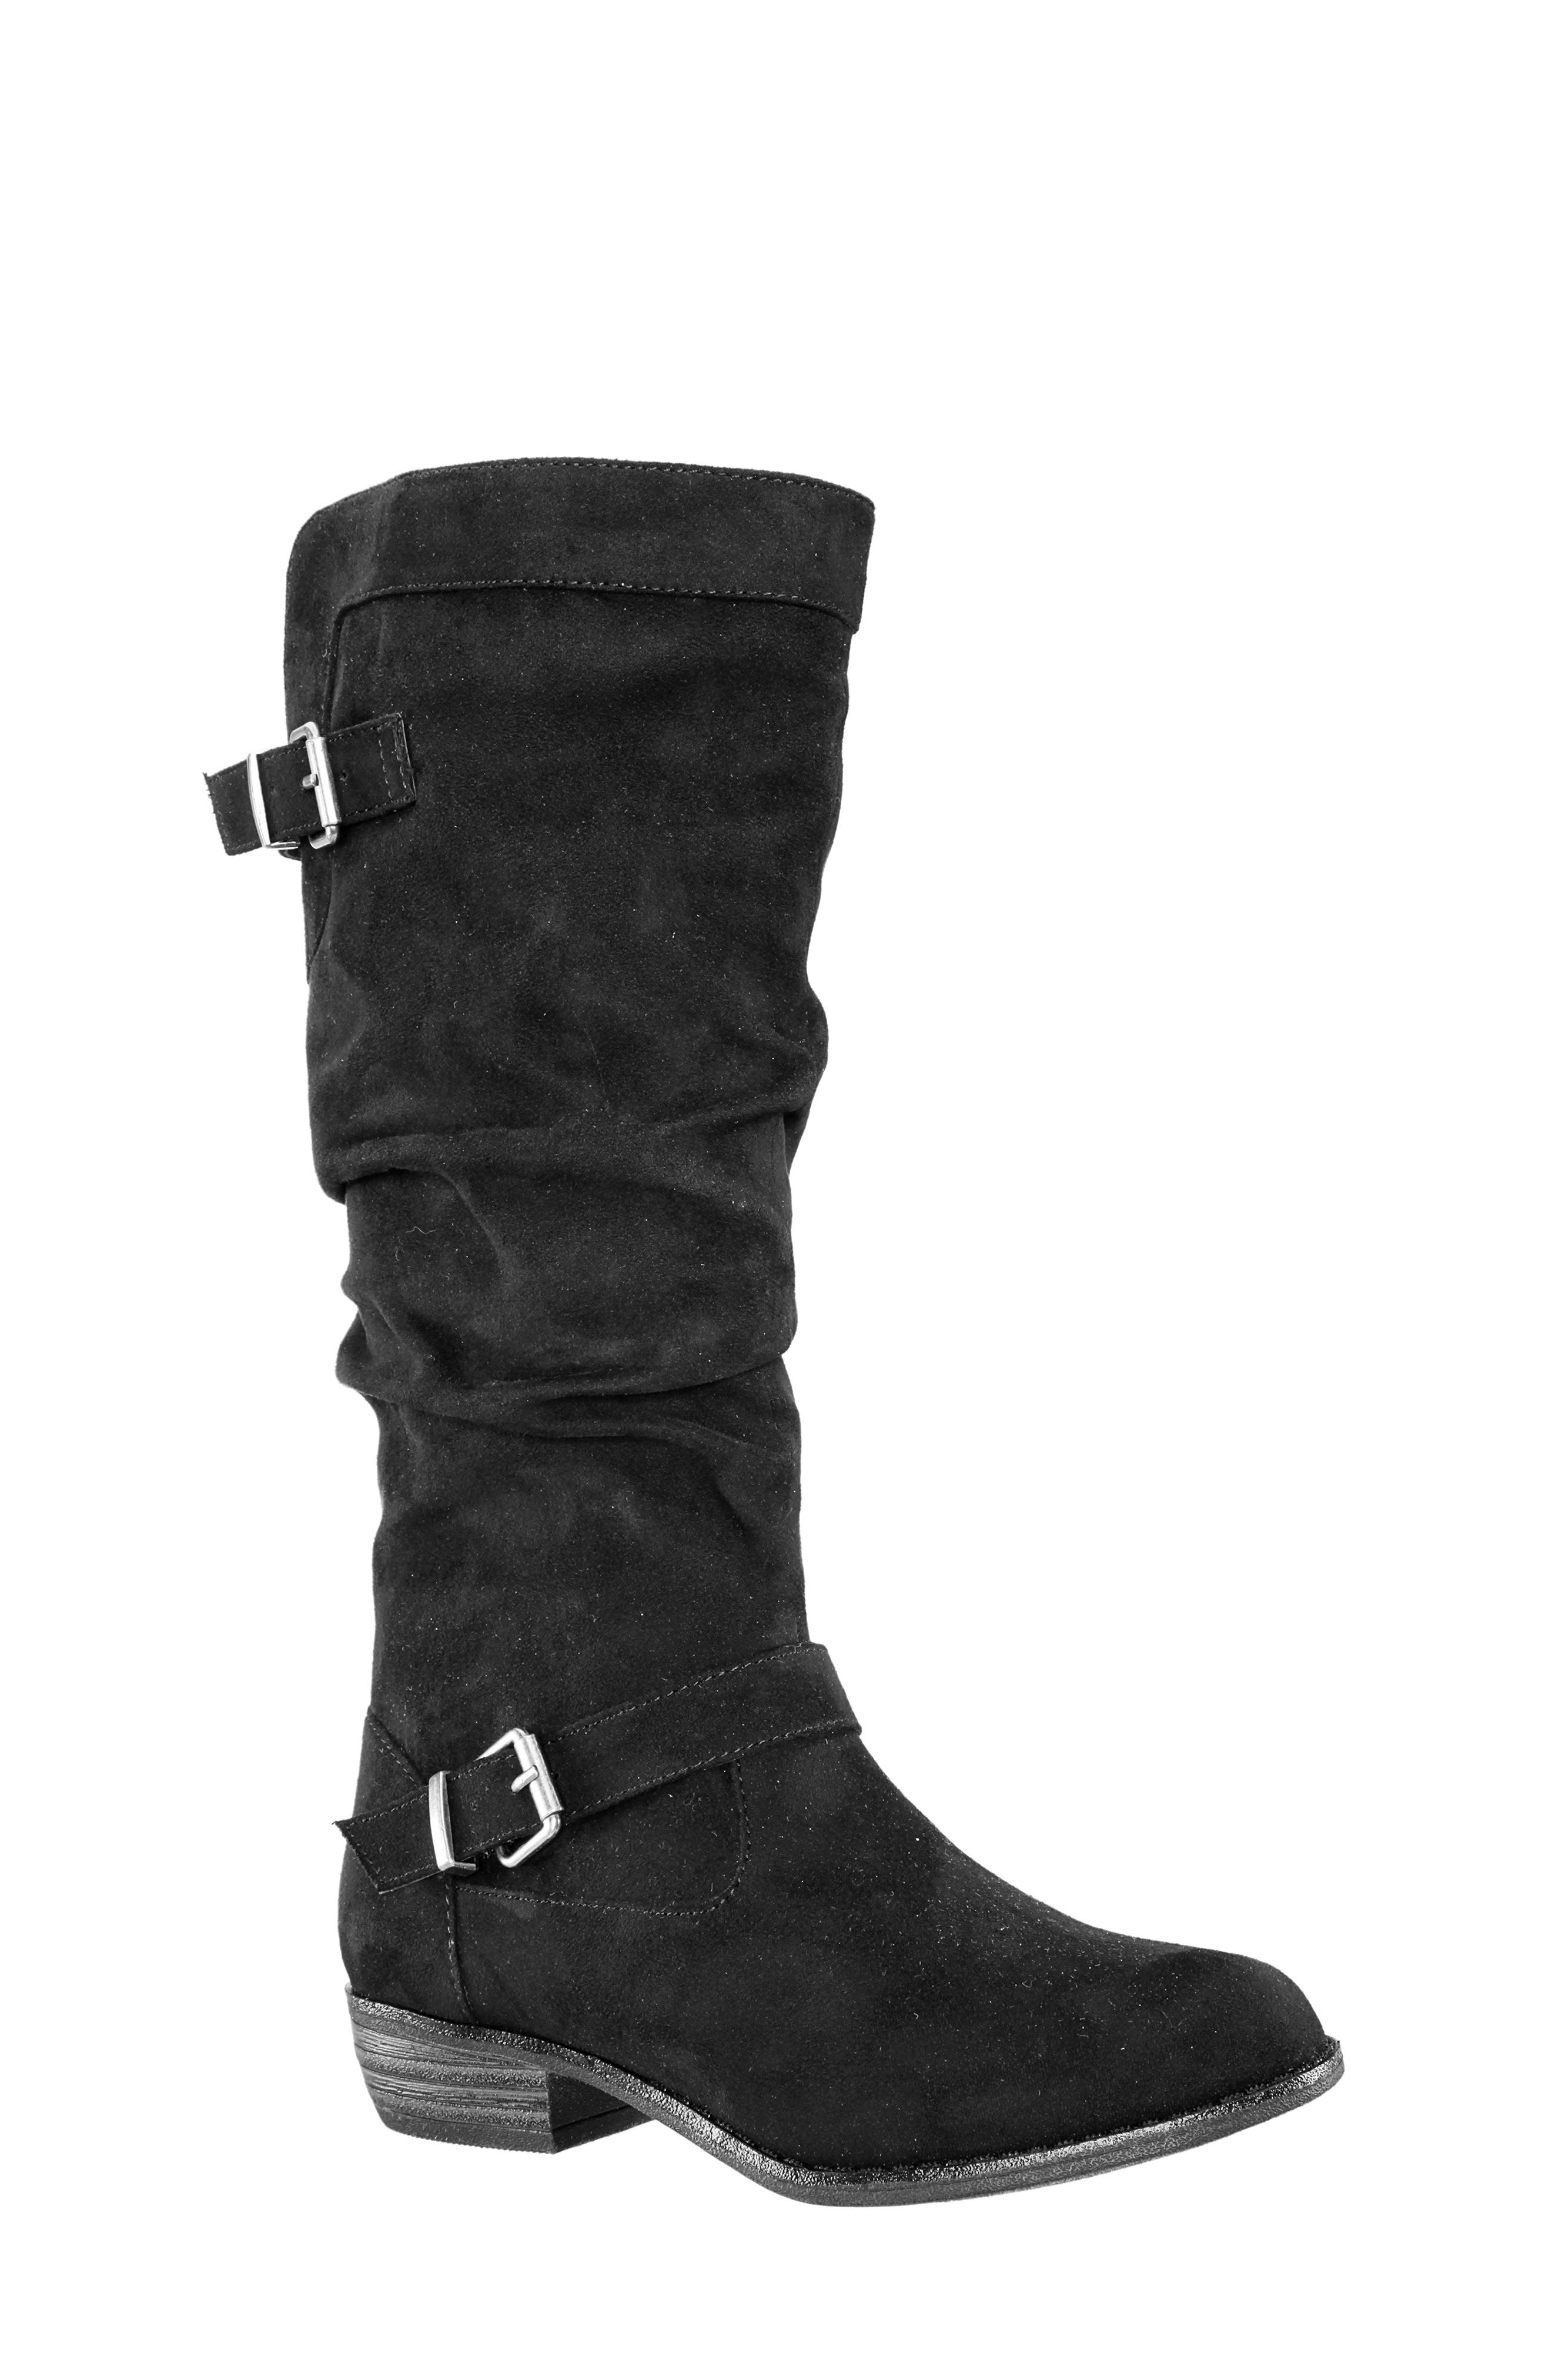 UPC 794378412748 product image for Girl's Nina Meris Slouch Boot, Size 2 M - Black | upcitemdb.com